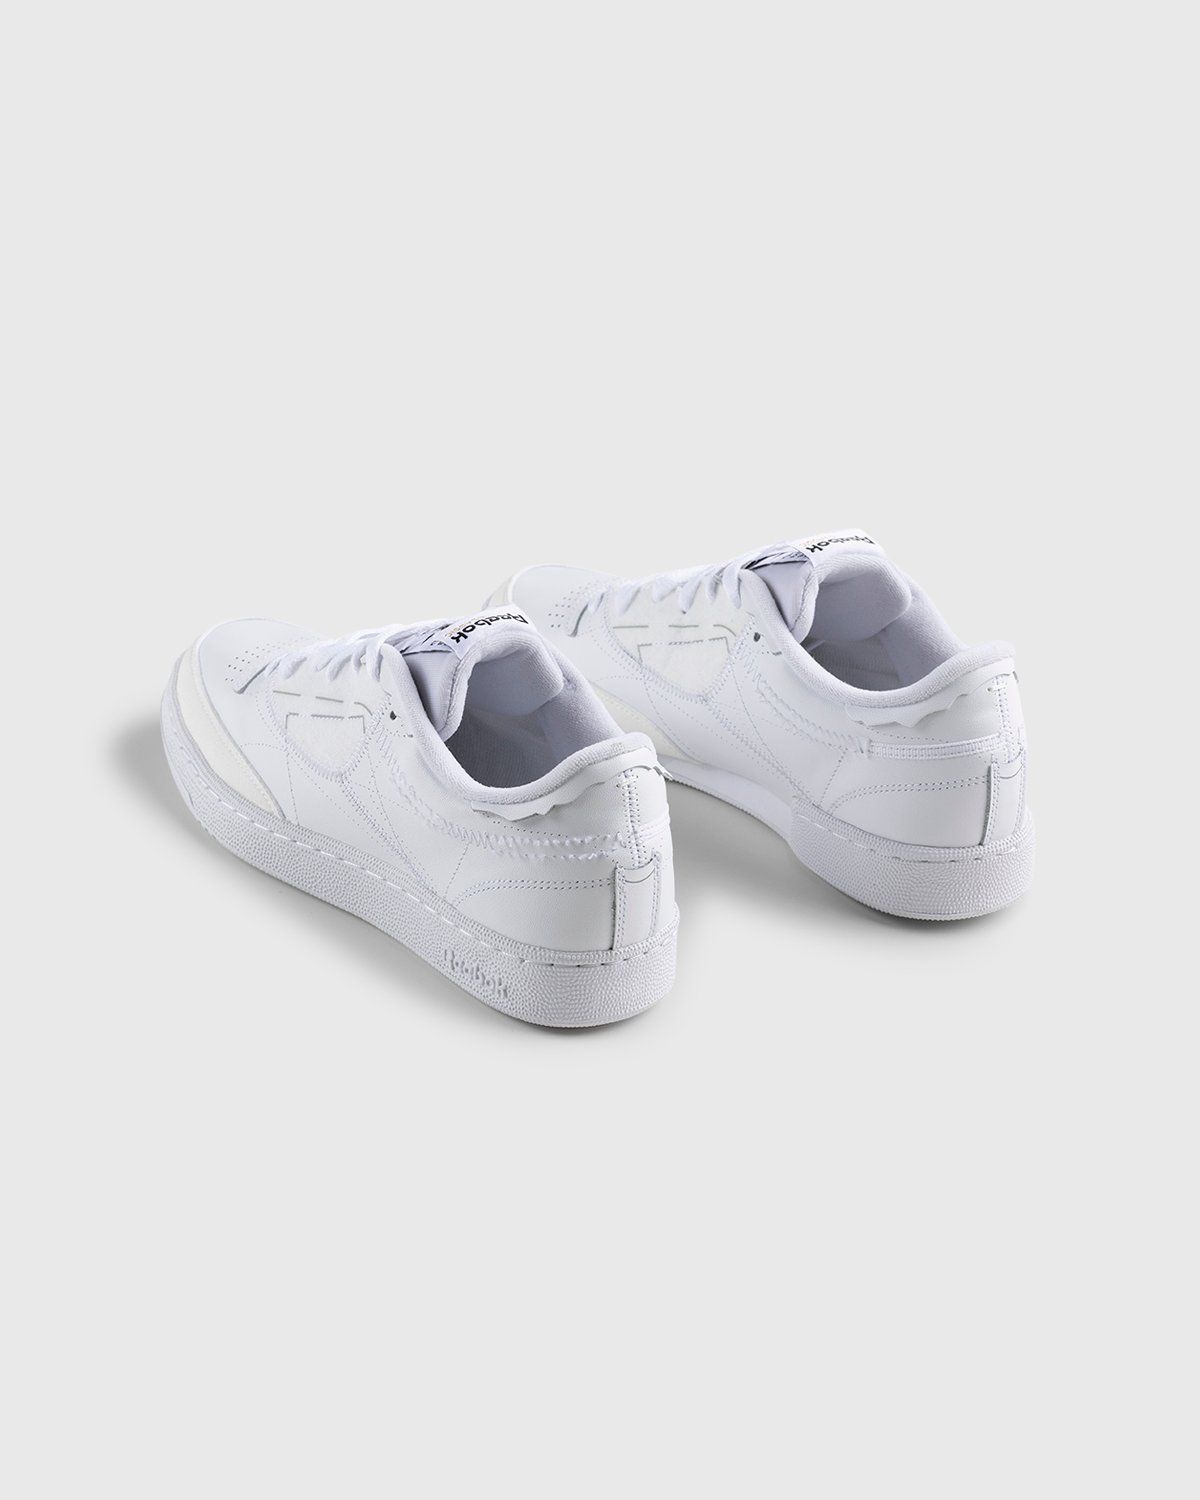 Maison Margiela x Reebok – Club C Memory Of Footwear White/Black/Footwear White - Sneakers - White - Image 5